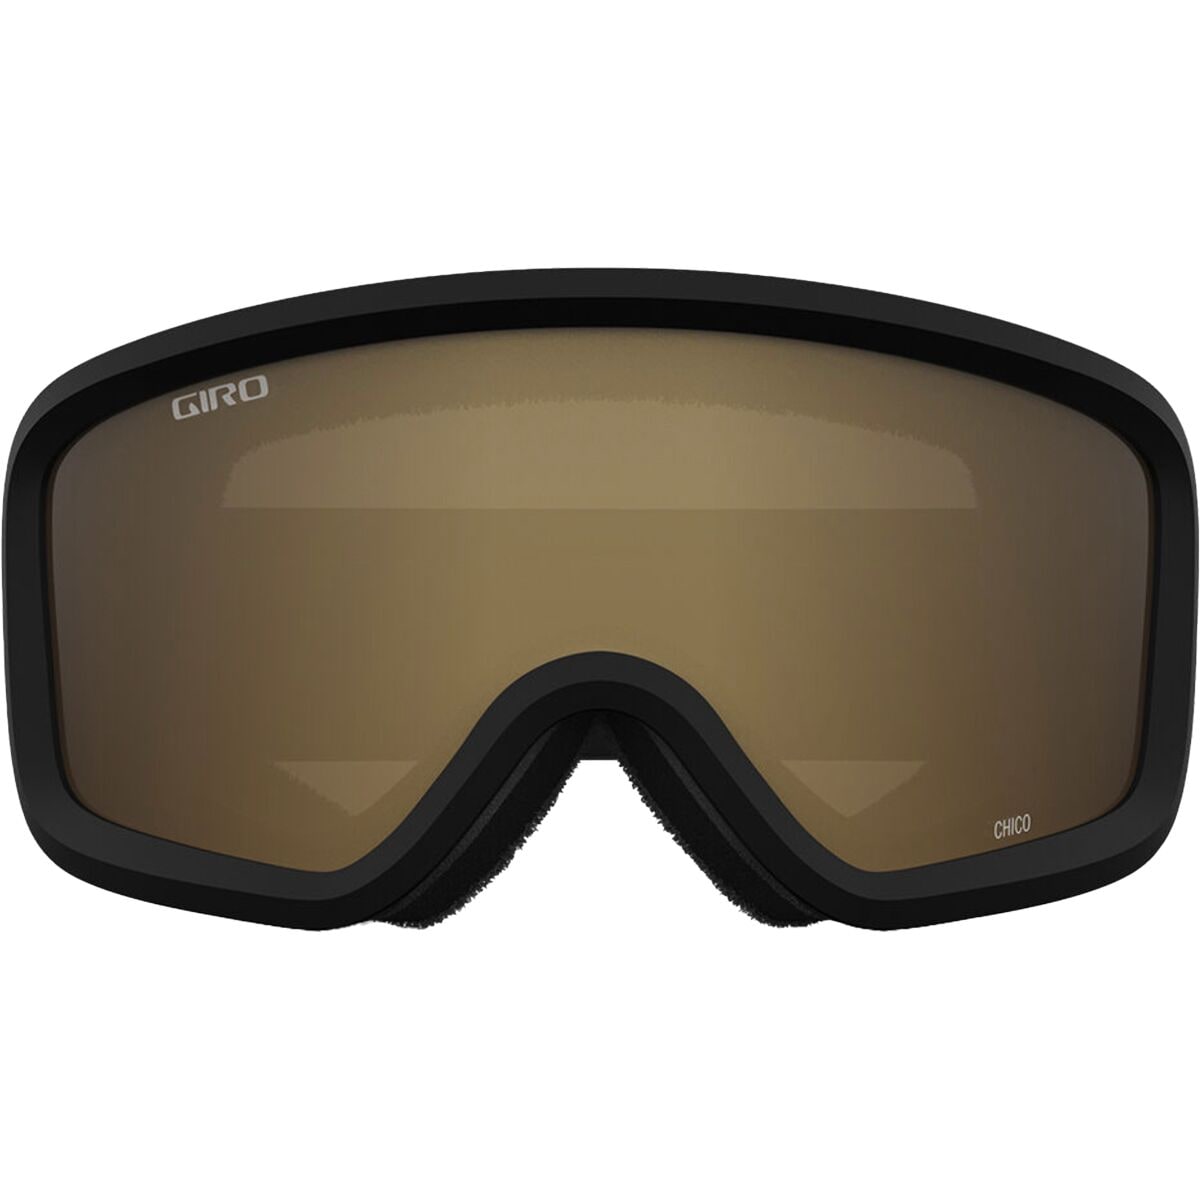 Giro Chico 2.0 Toddler Ski Goggles - Snowboard Goggles for Kids, Boys &  Girls 2-4 - Anti-Fog